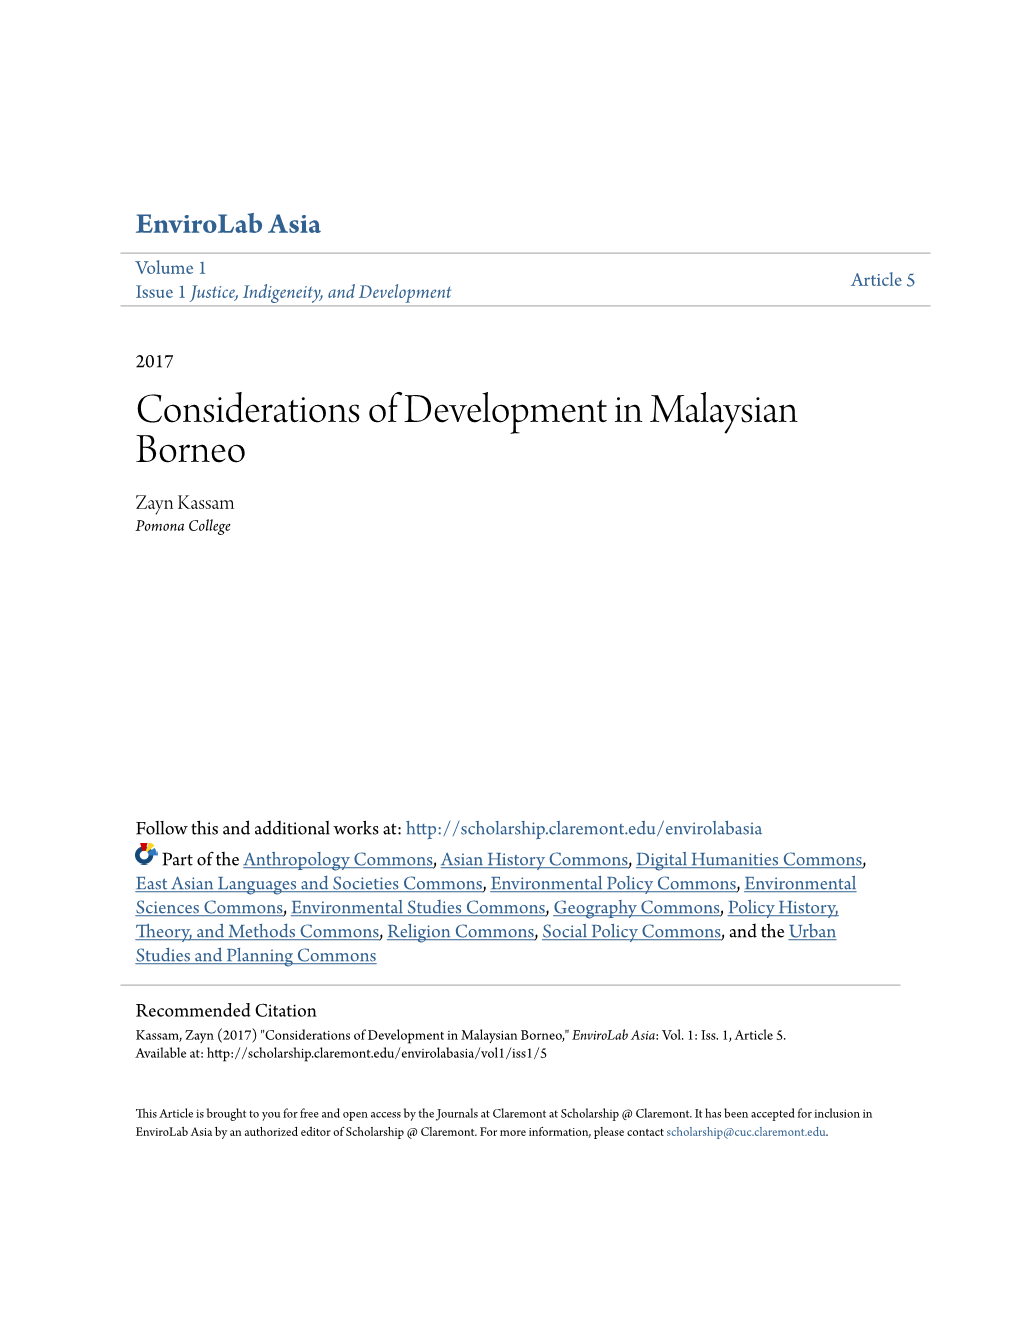 Considerations of Development in Malaysian Borneo Zayn Kassam Pomona College